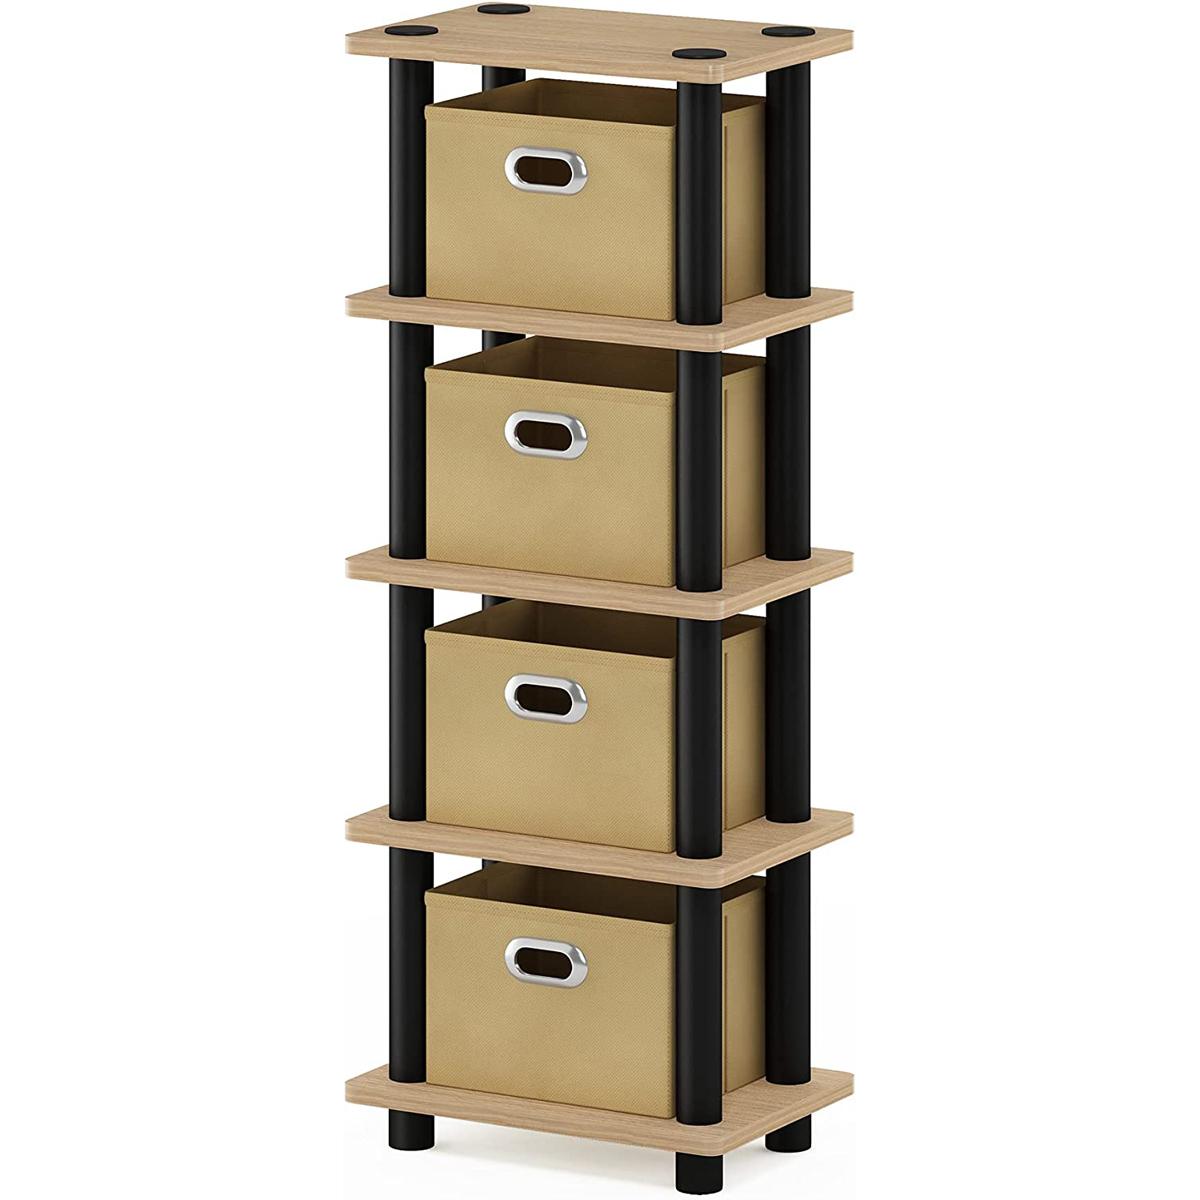 4-Bin Furinno Laci Rack Storage Shelf for $16.93